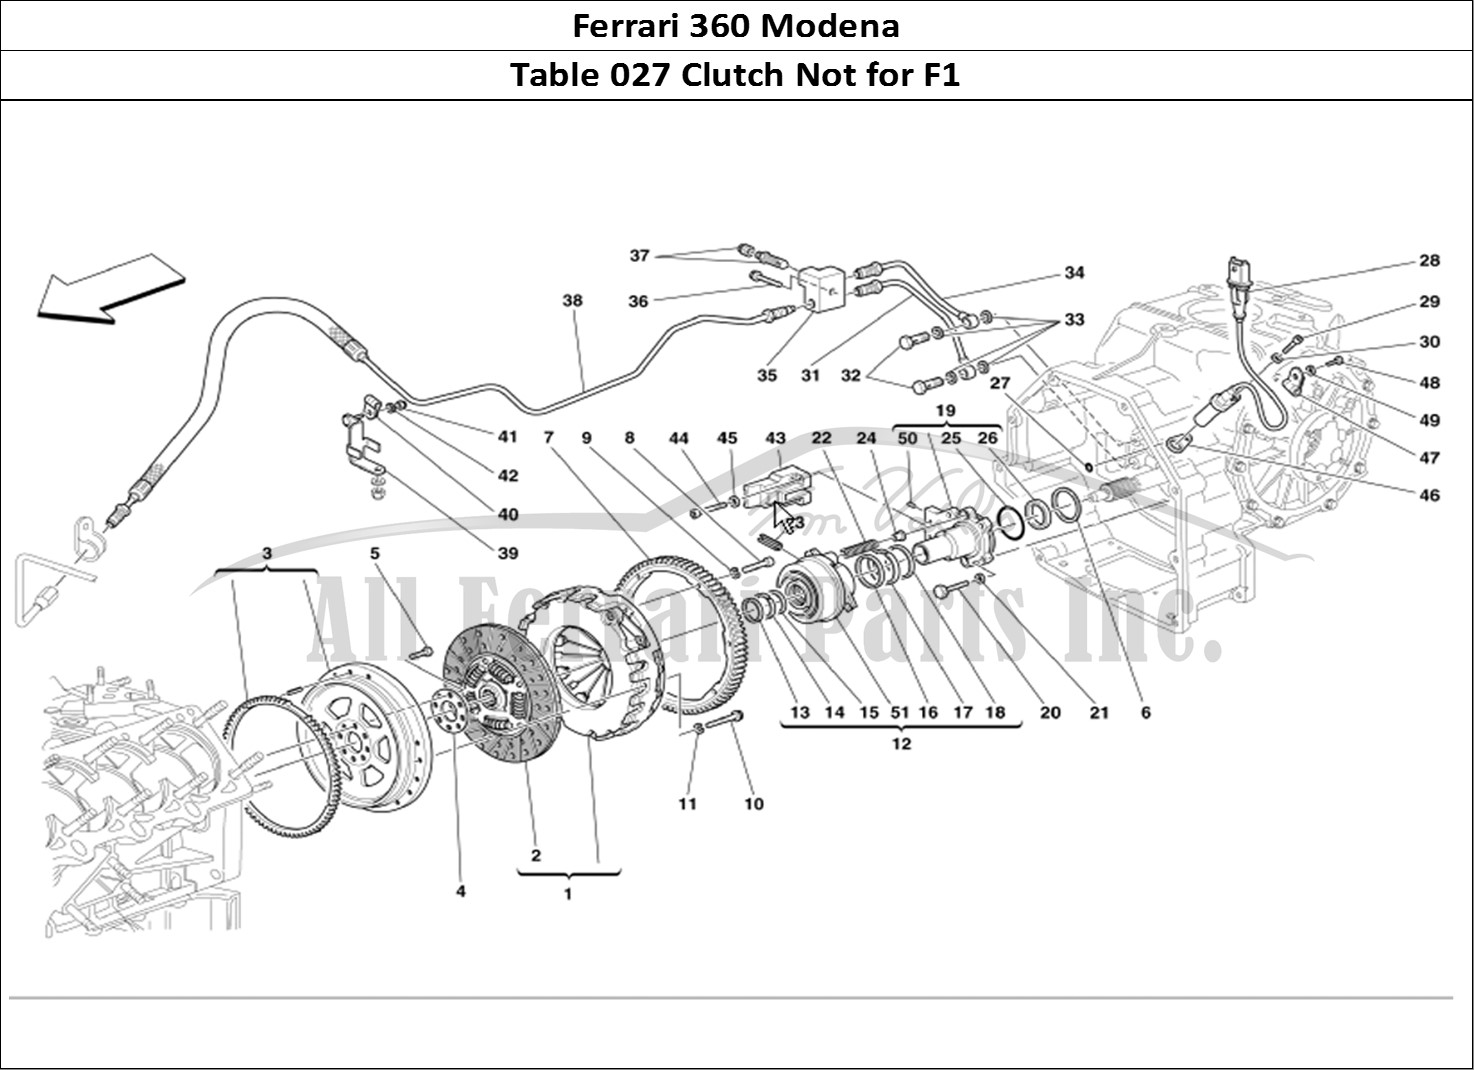 Ferrari Parts Ferrari 360 Modena Page 027 Clutch and Controls -Not